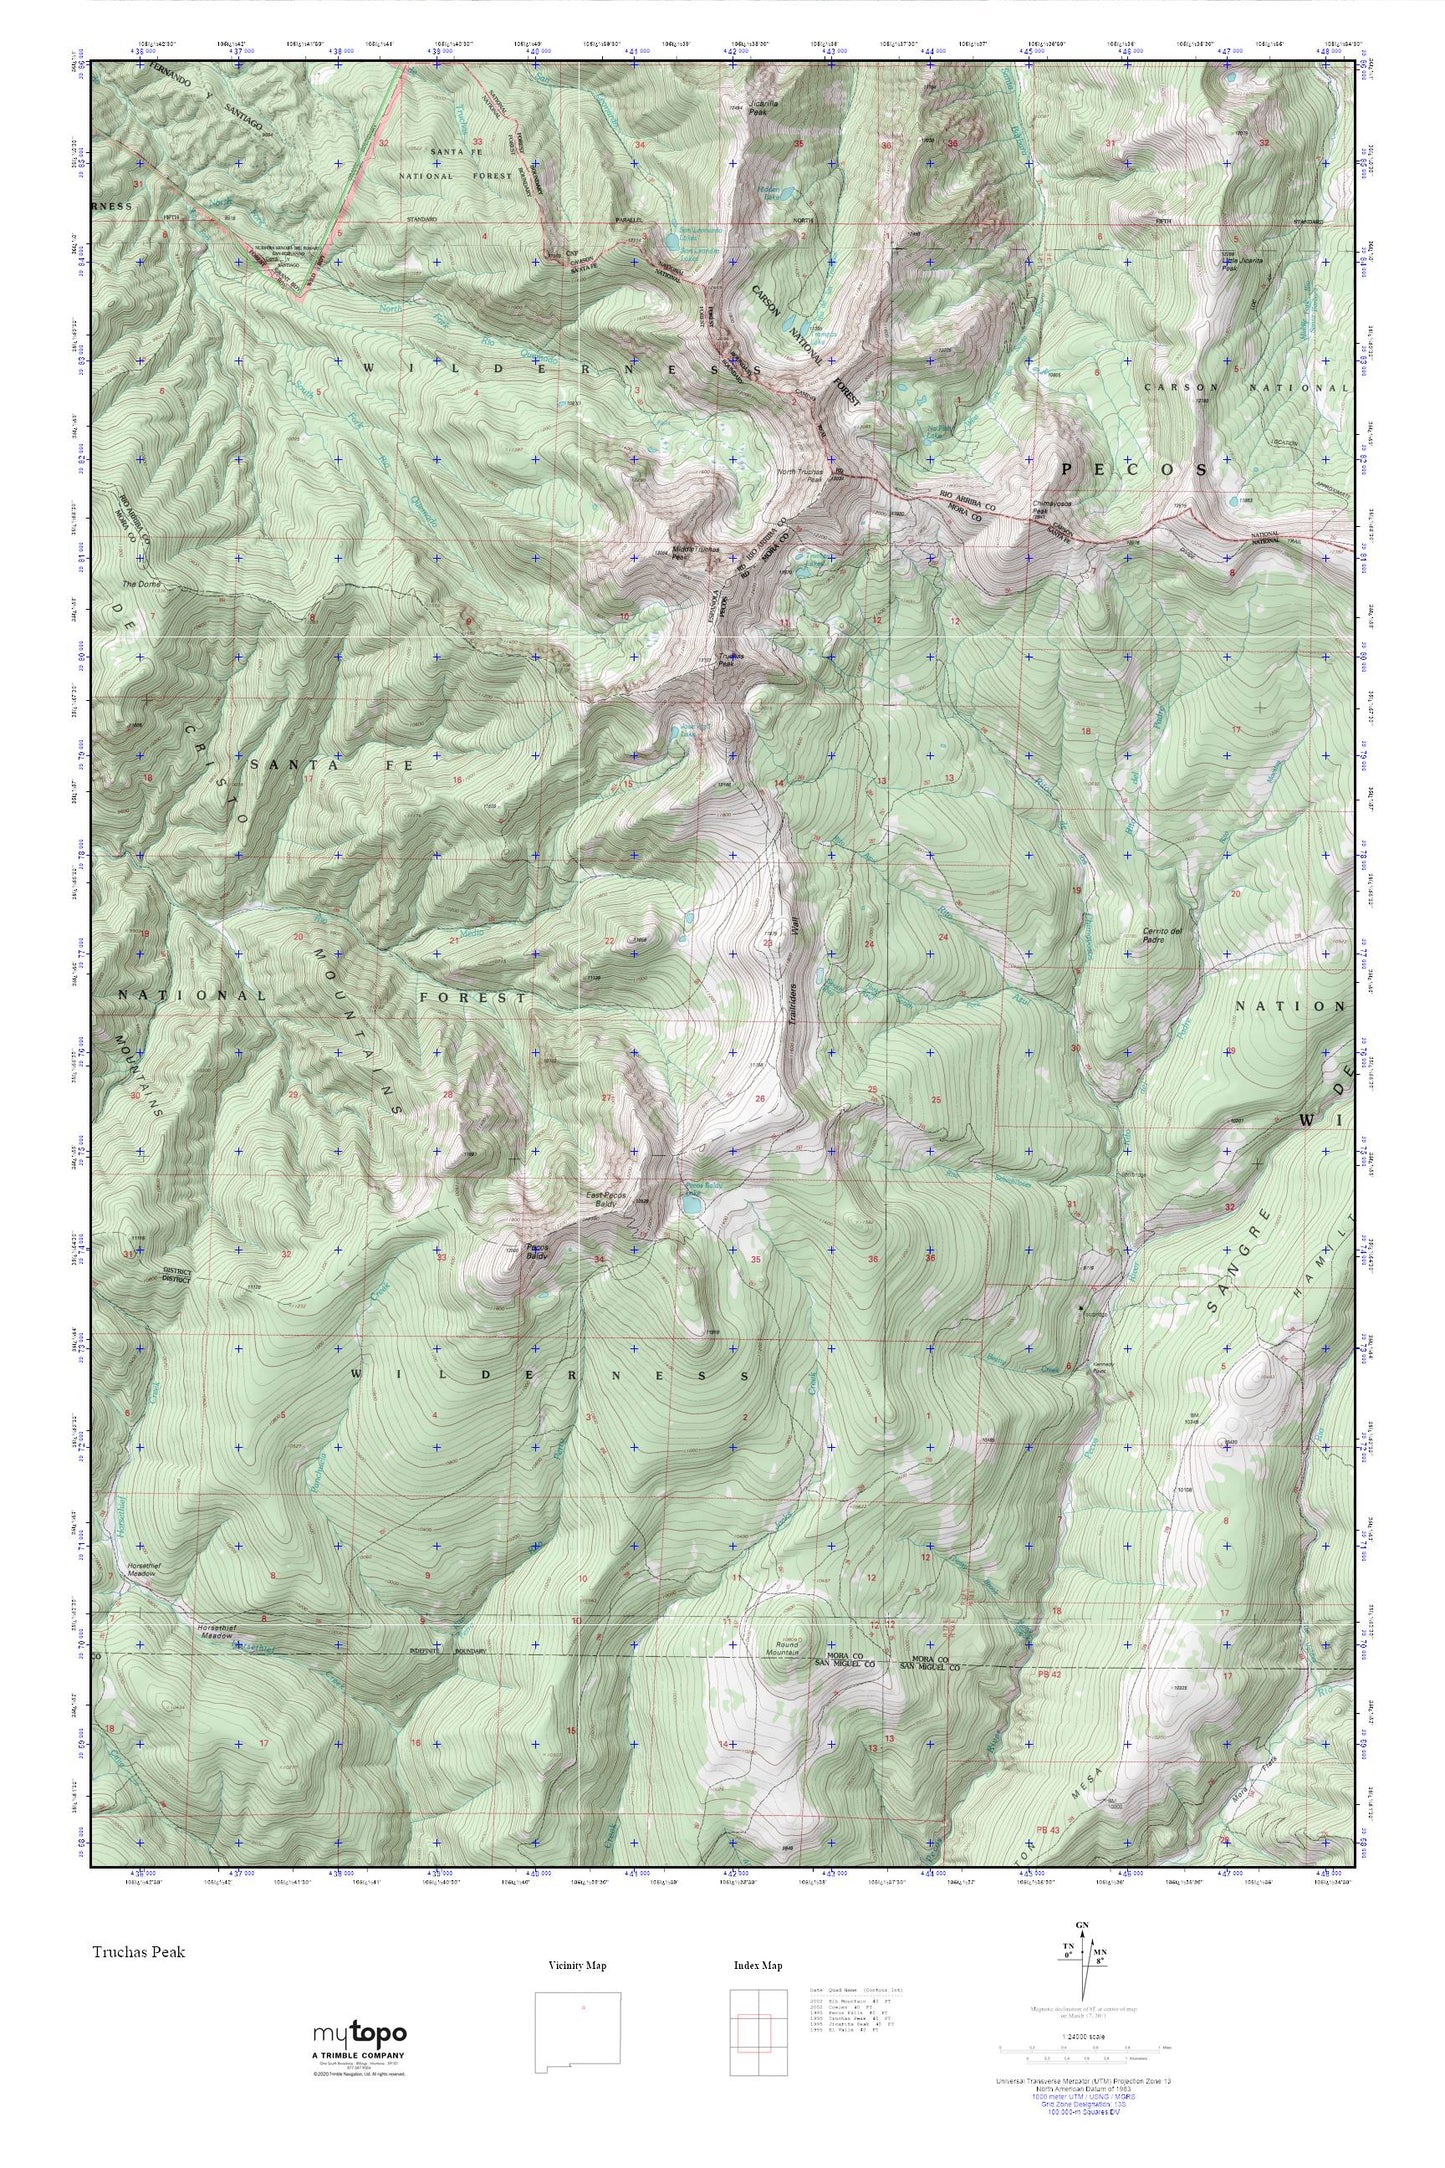 Truchas Peak MyTopo Explorer Series Map Image